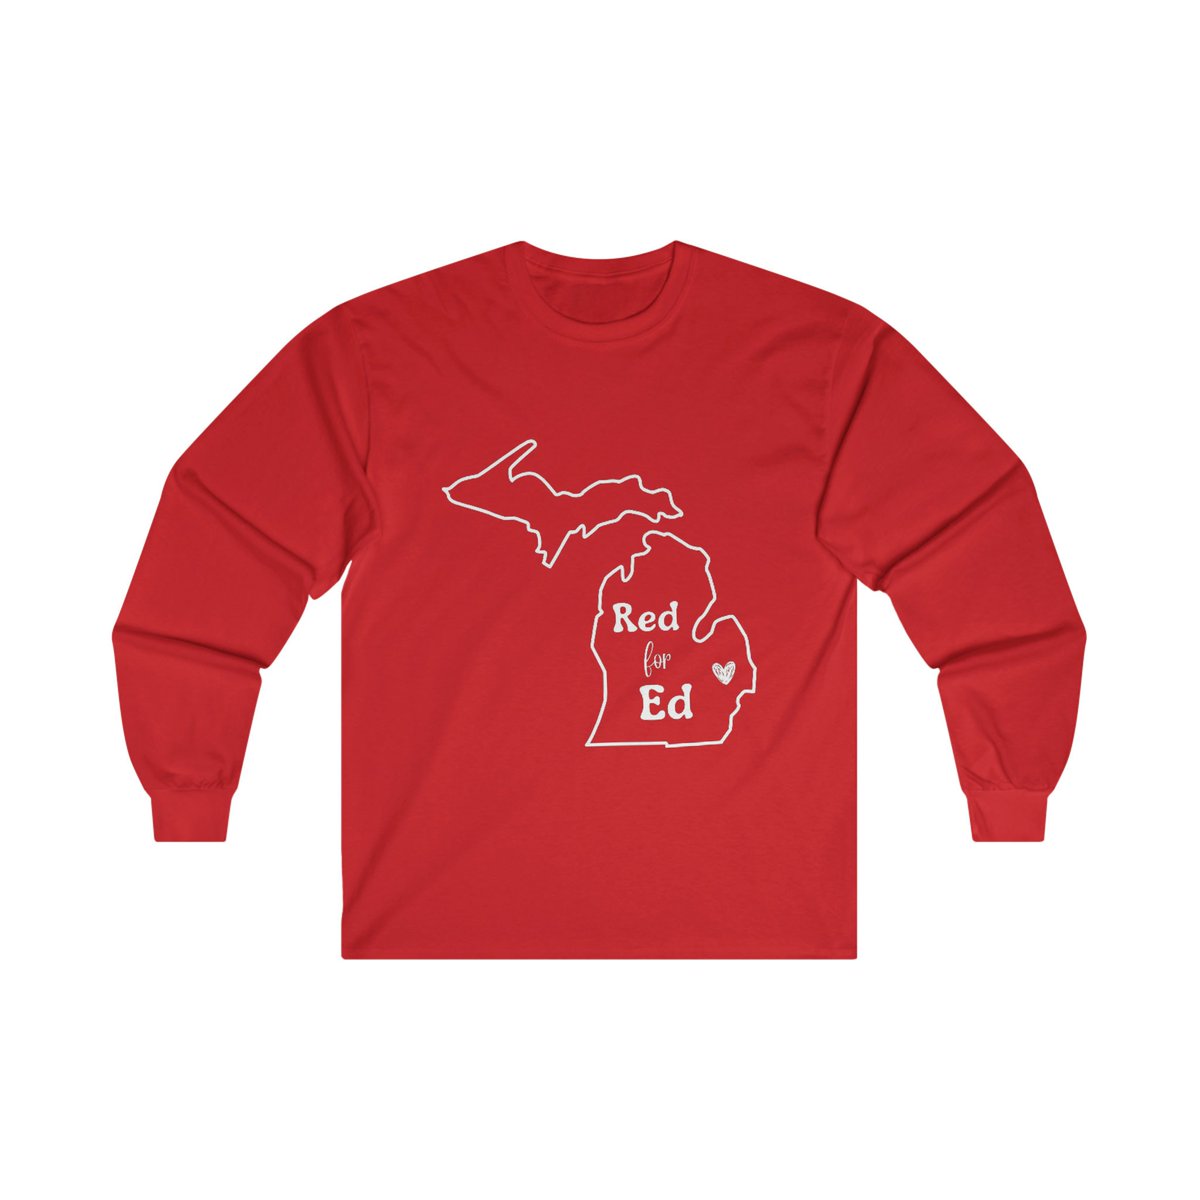 Hey Michigan Teachers! Check out the latest #RedforEd shirt on my #Etsy store! 
15% off just for educators! 
emilyarindesigns.etsy.com
#TeacherLongSleeve #TeacherShirt #Education